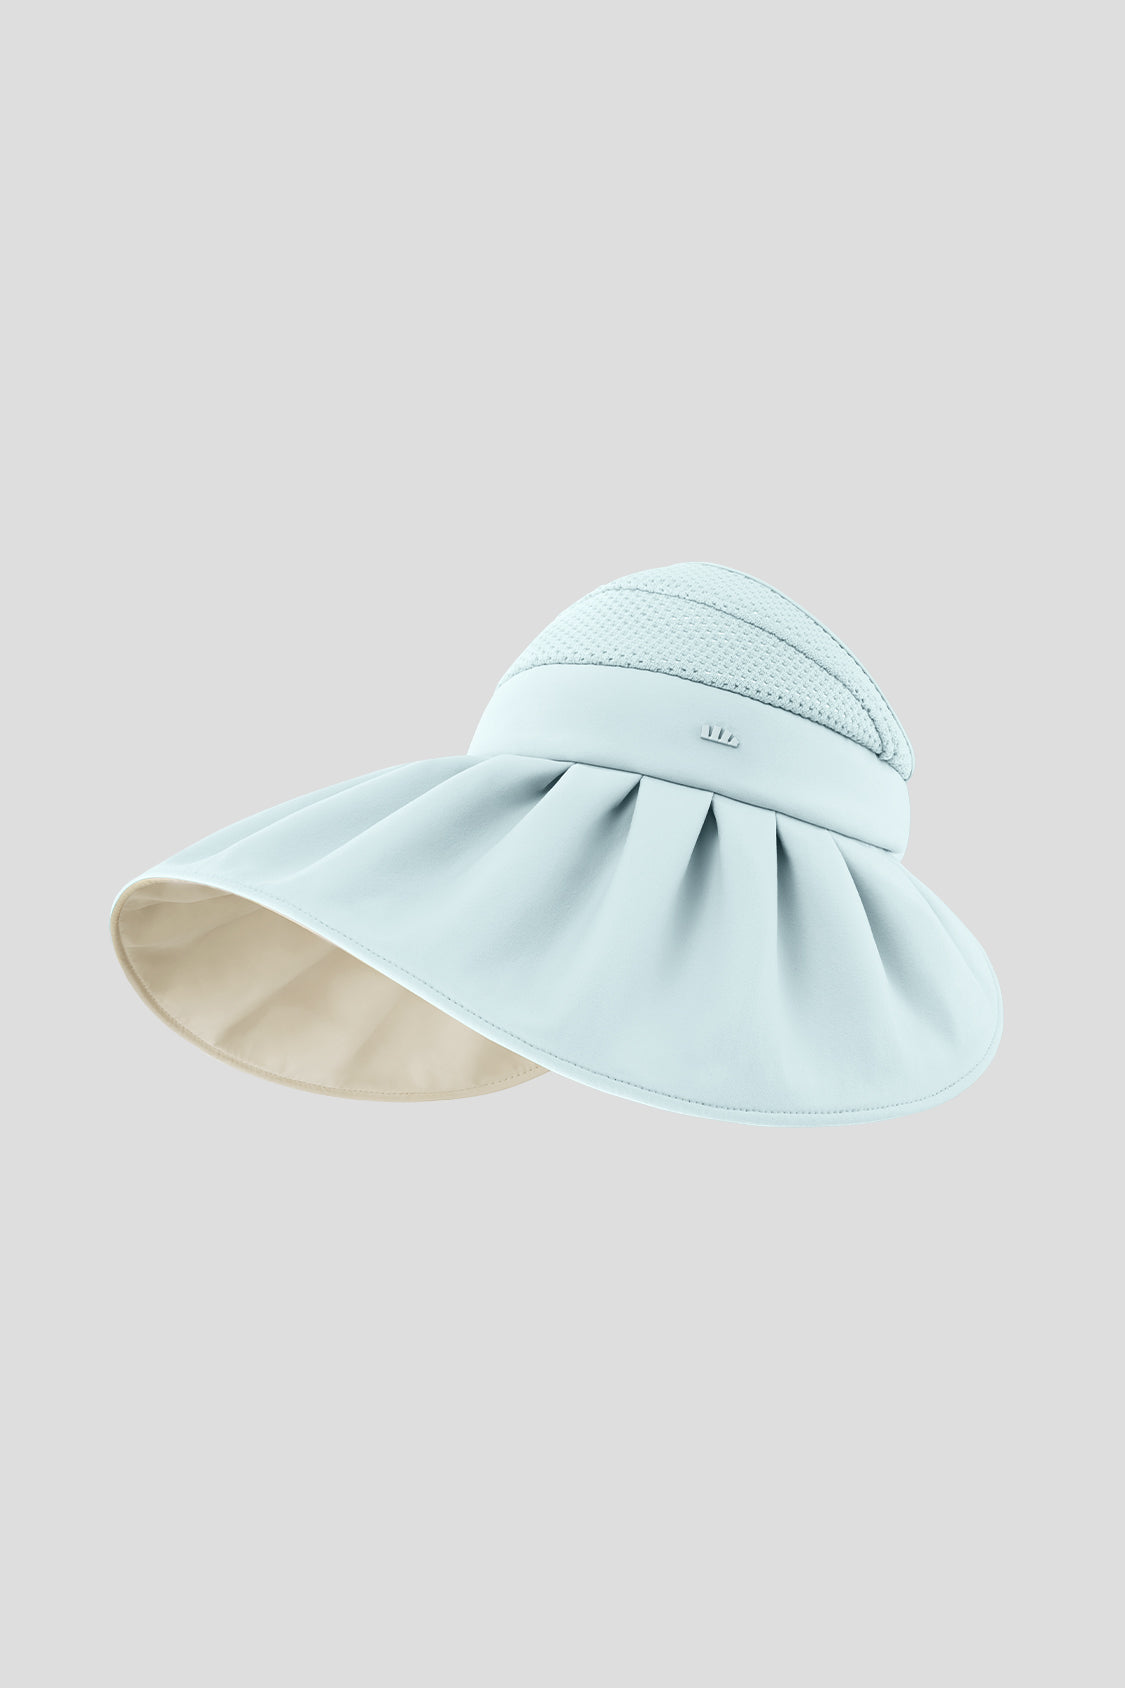 beneunder women's sun hats upf50+ #color_misty blue